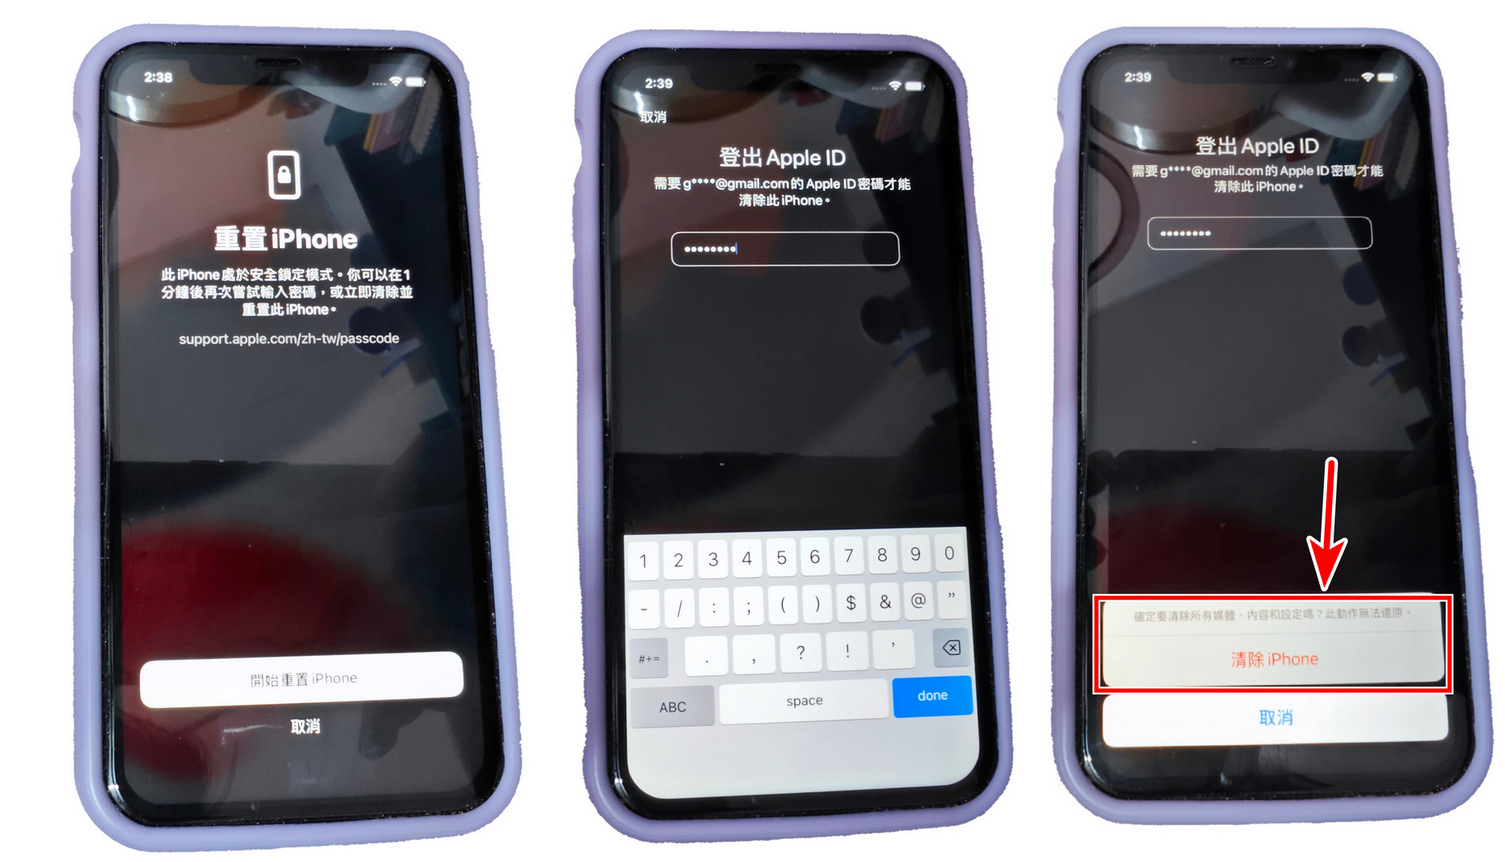 iphone忘記螢幕密碼怎麼辦，3種免電腦解鎖方法! - iPhone已停用破解 - 敗家達人推薦